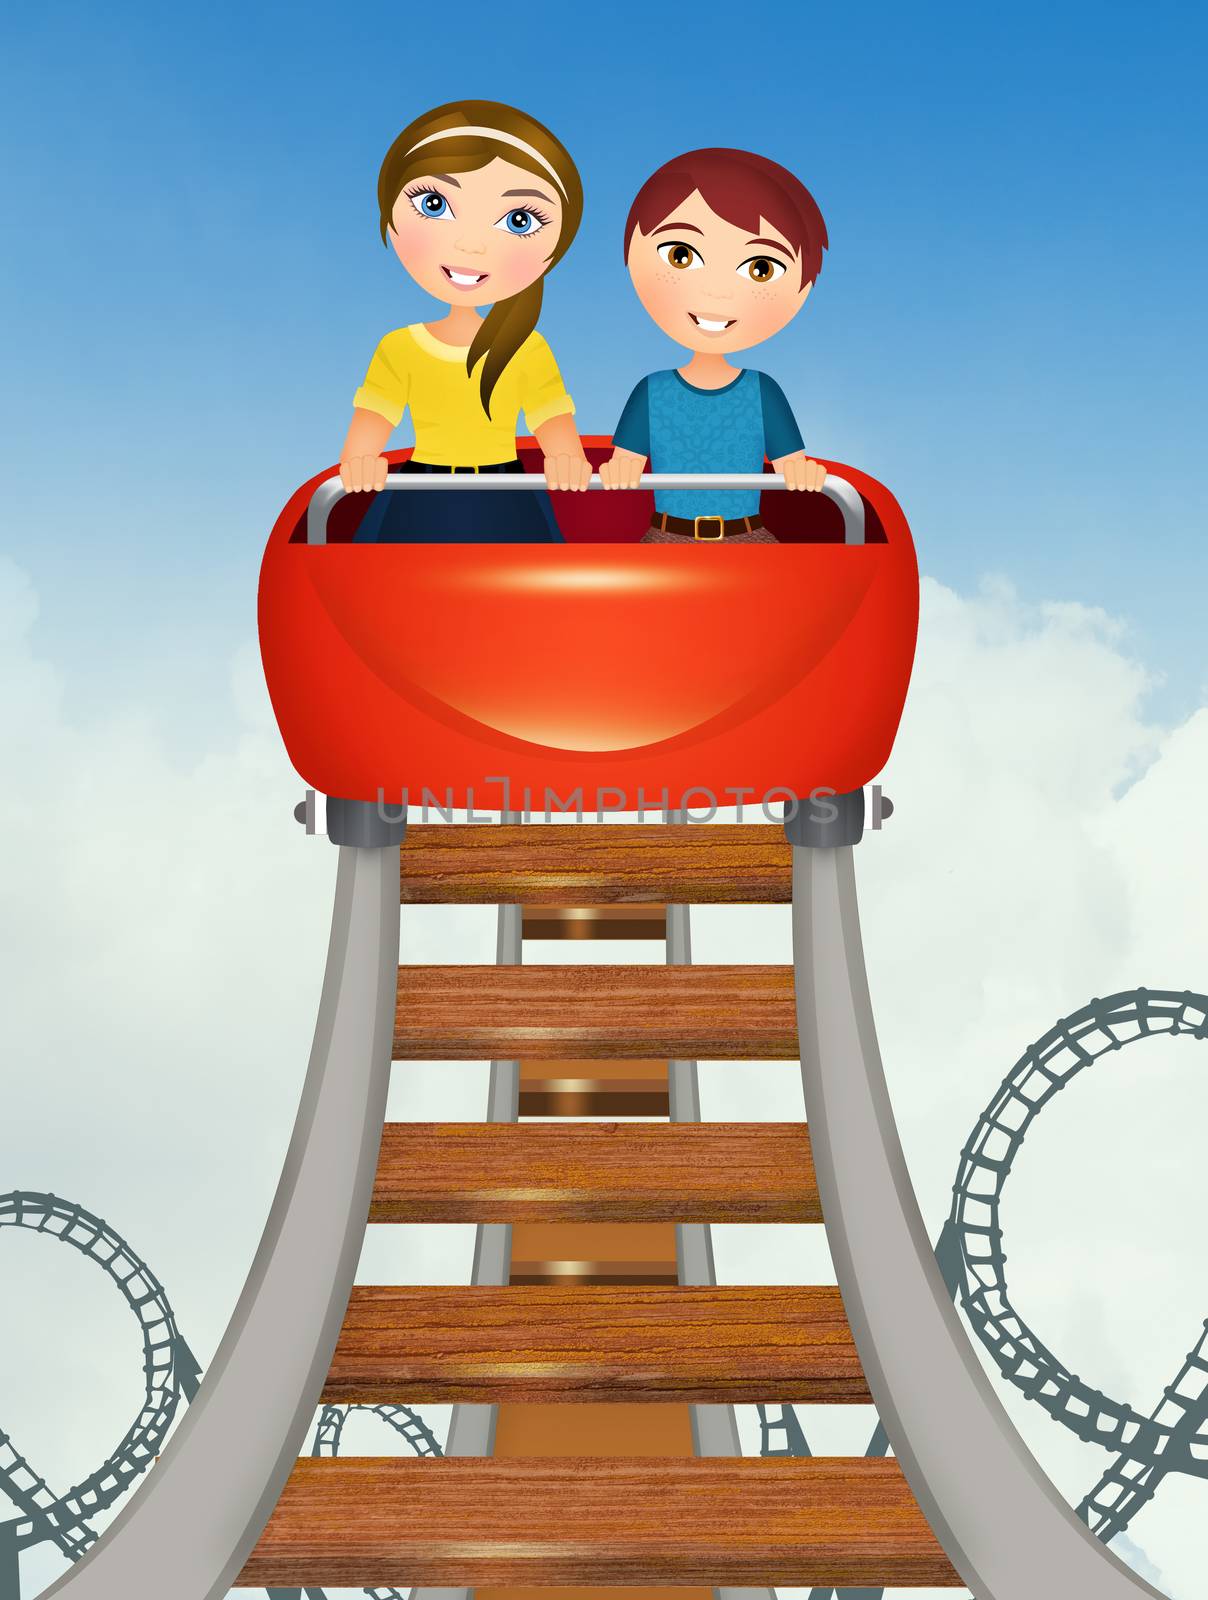 illustration of children on roller coaster